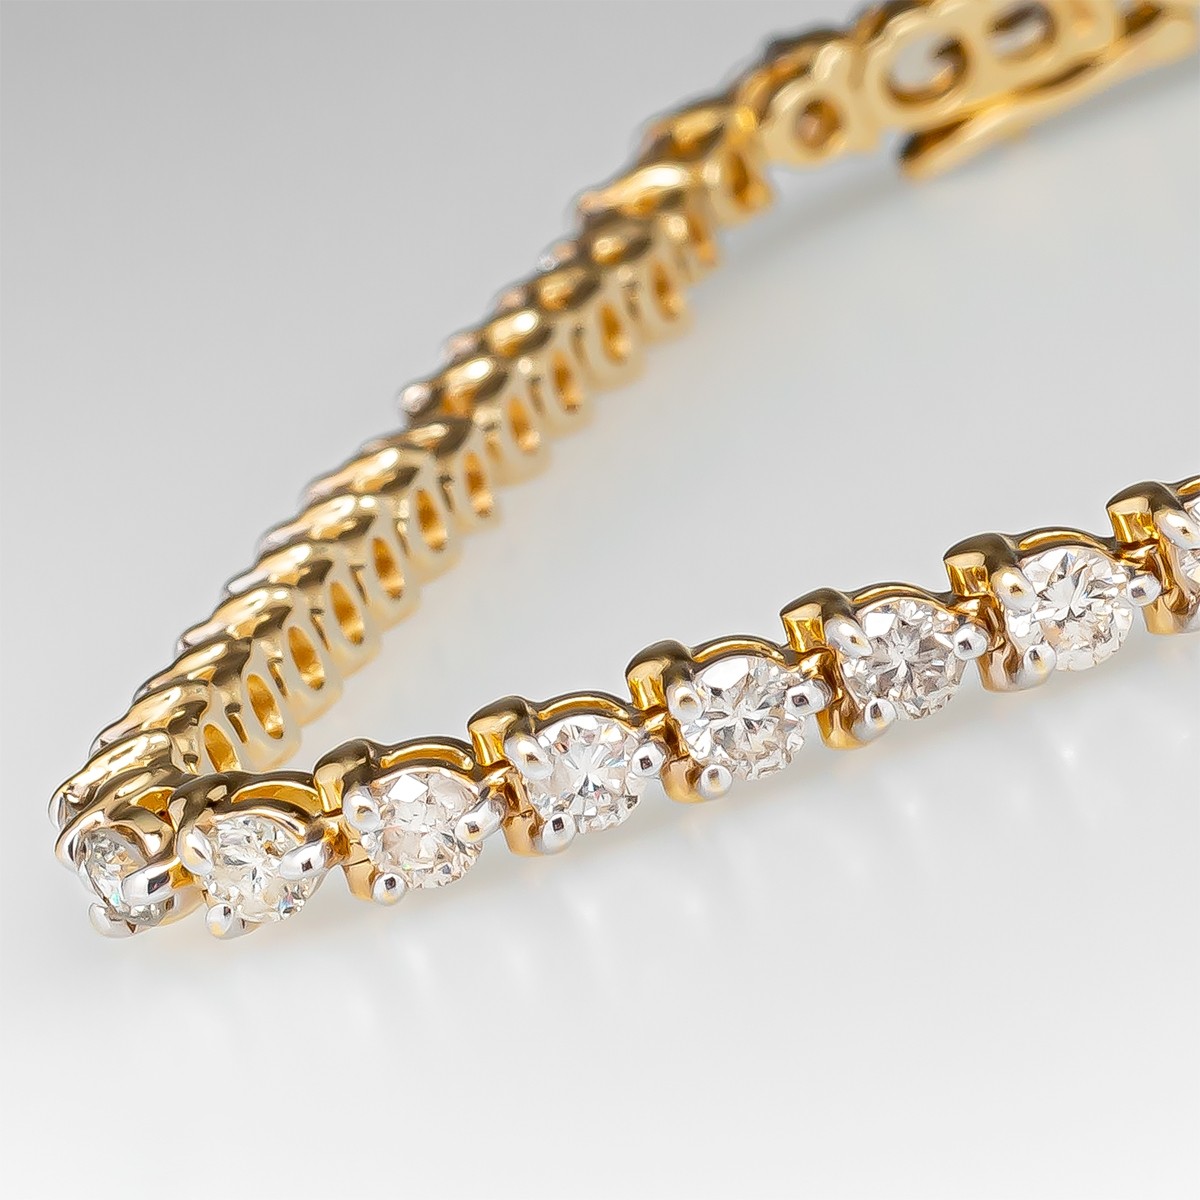 5 Carat Diamond Tennis Bracelet in 14K Yellow Gold 8-Inch